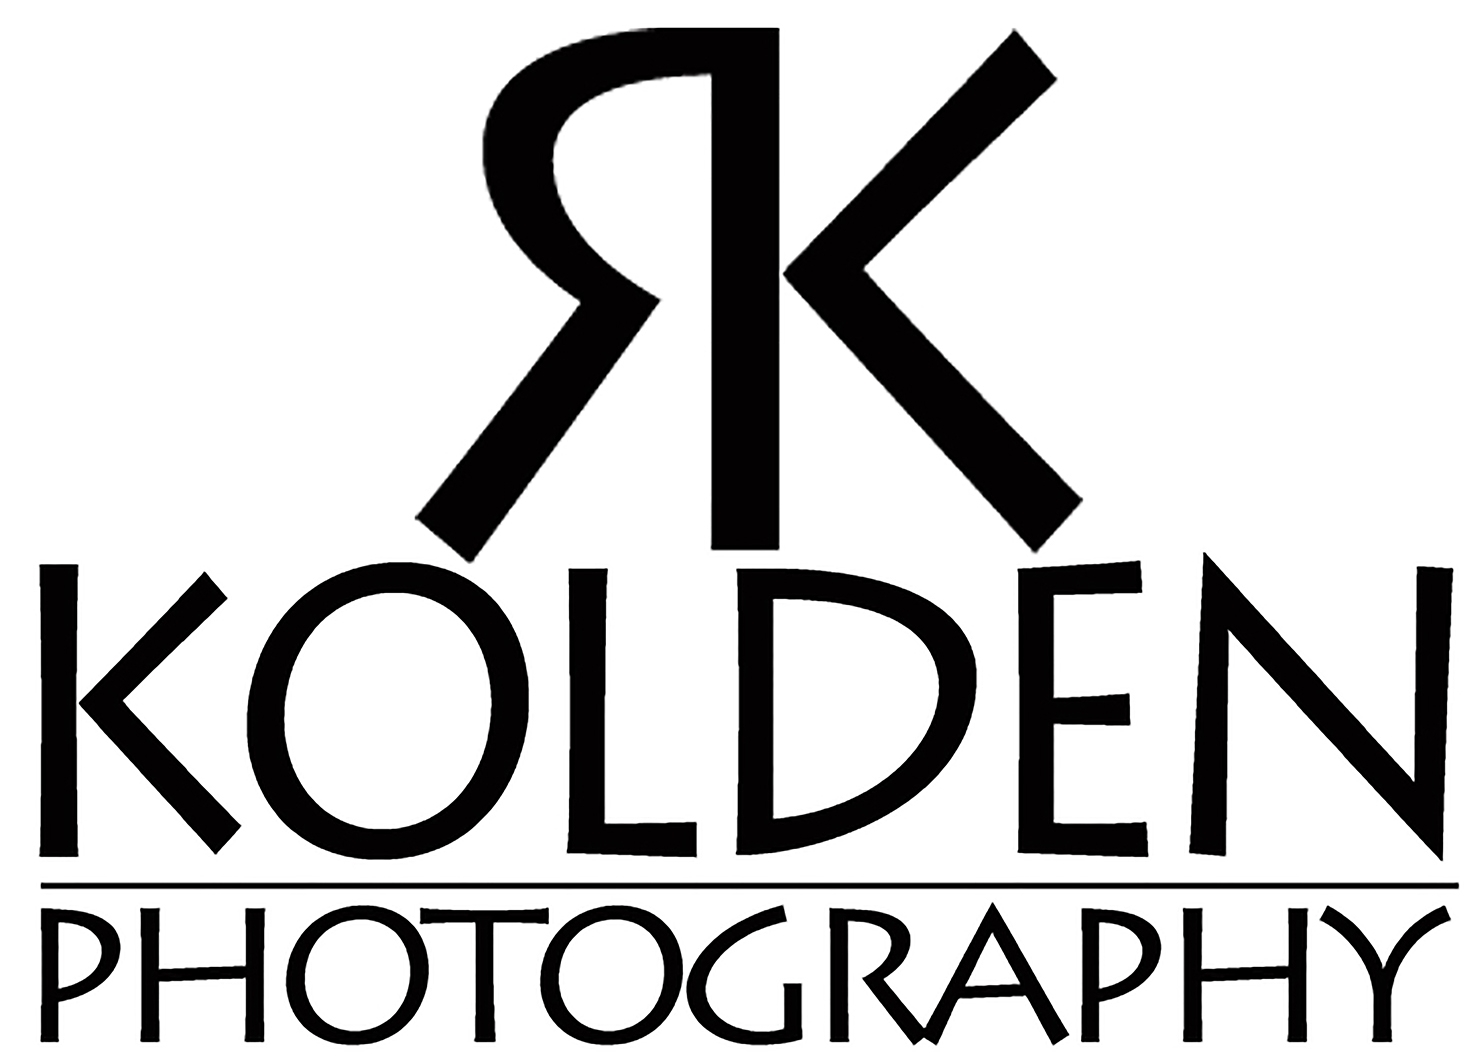 Kolden Photography